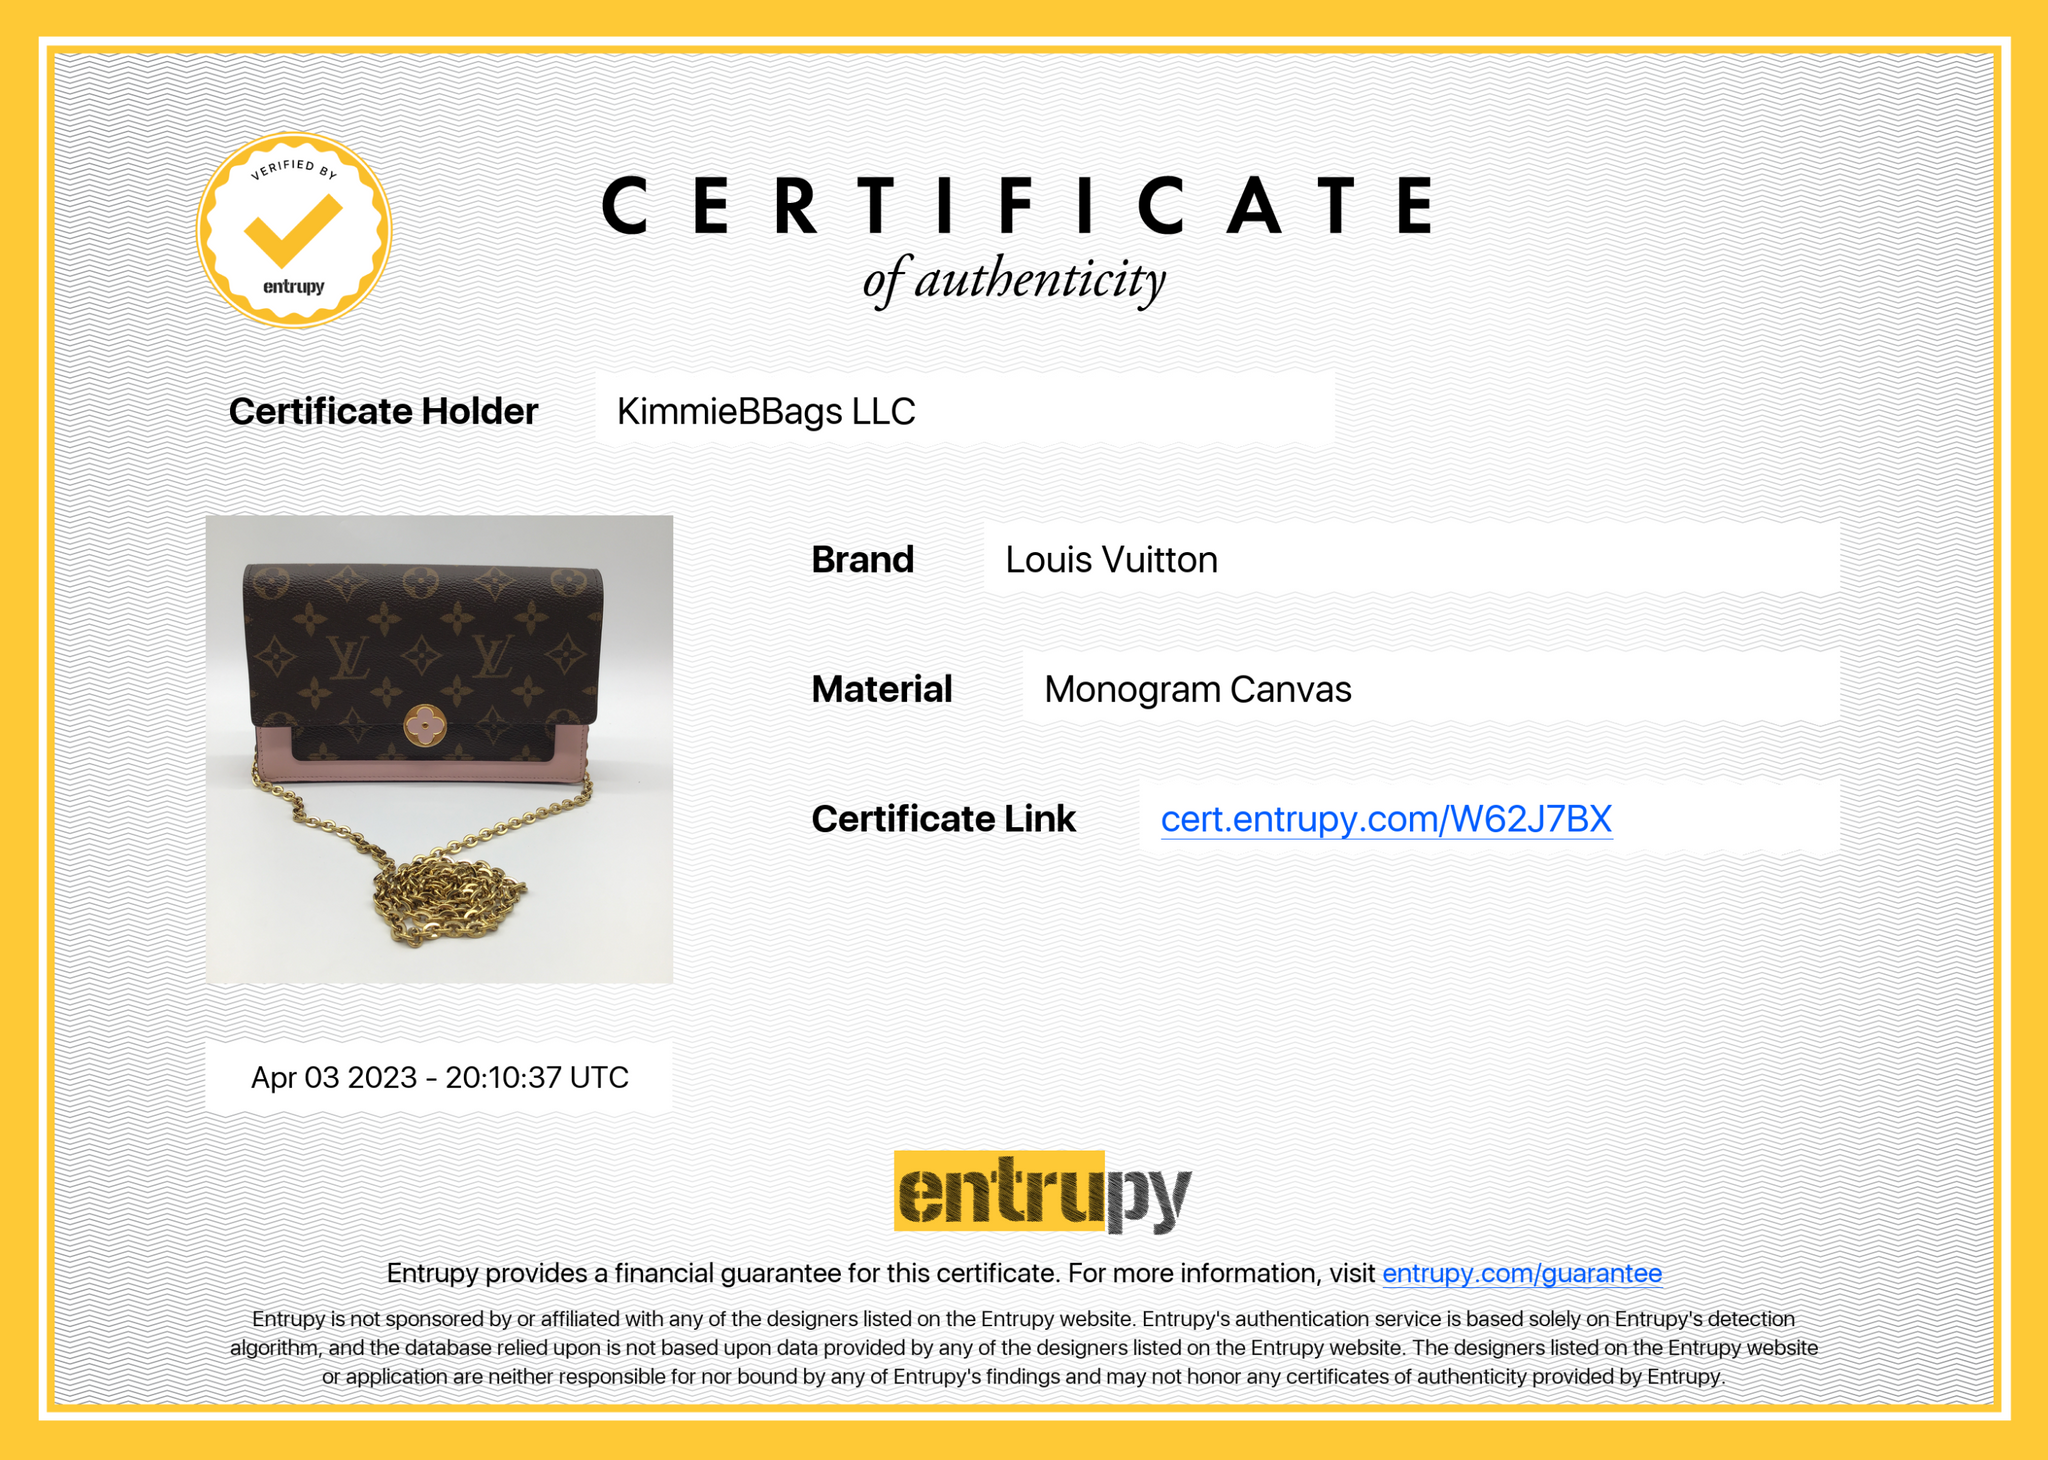 LV bag Louis Vuitton Flore Chain Wallet Monogram M69579, Women's Fashion,  Bags & Wallets, Cross-body Bags on Carousell